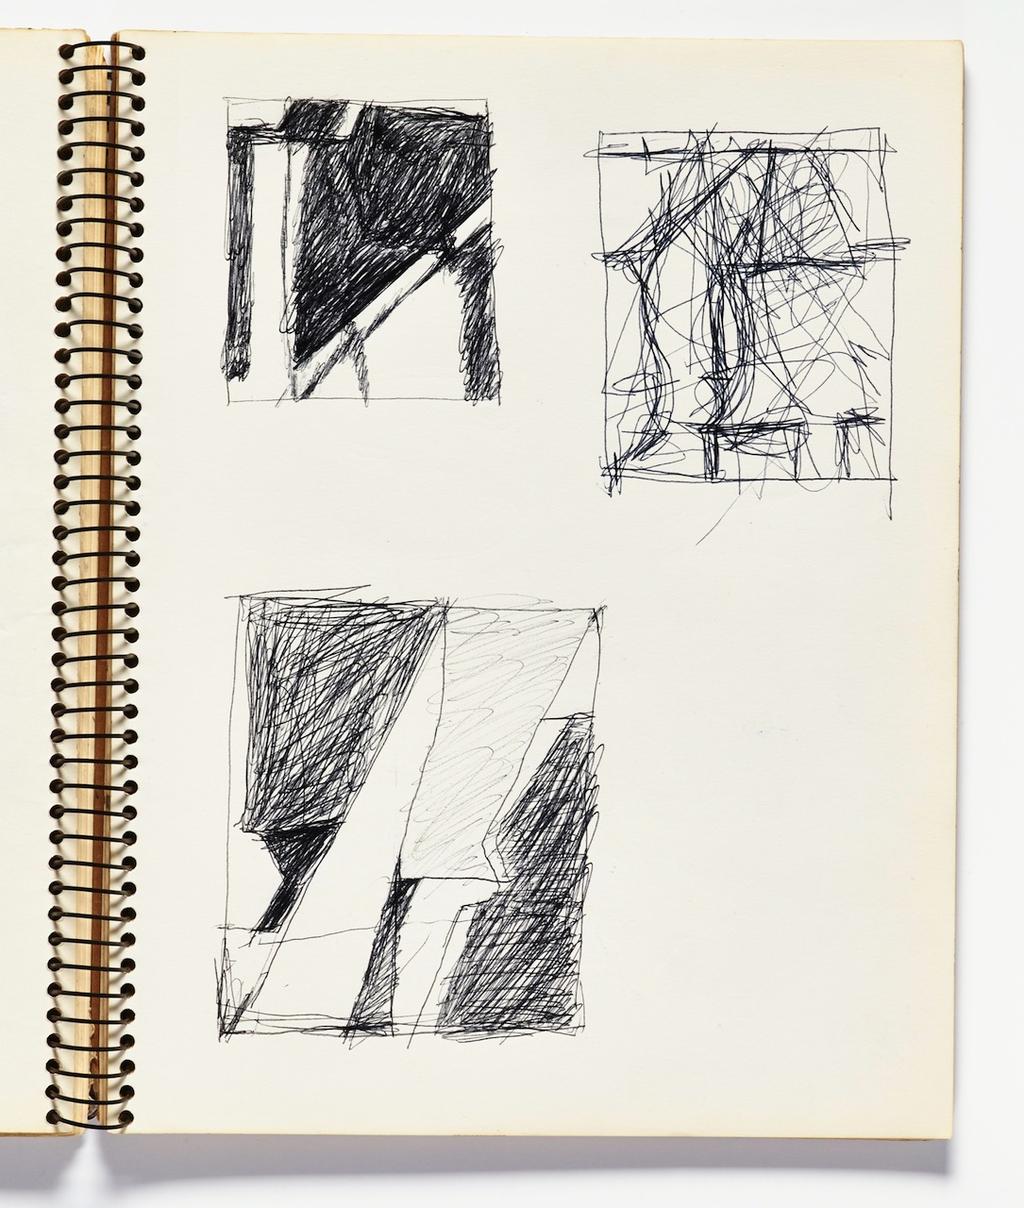 Foundation) Richard Diebenkorn, Untitled from Sketchbook #8, page 85 (1943